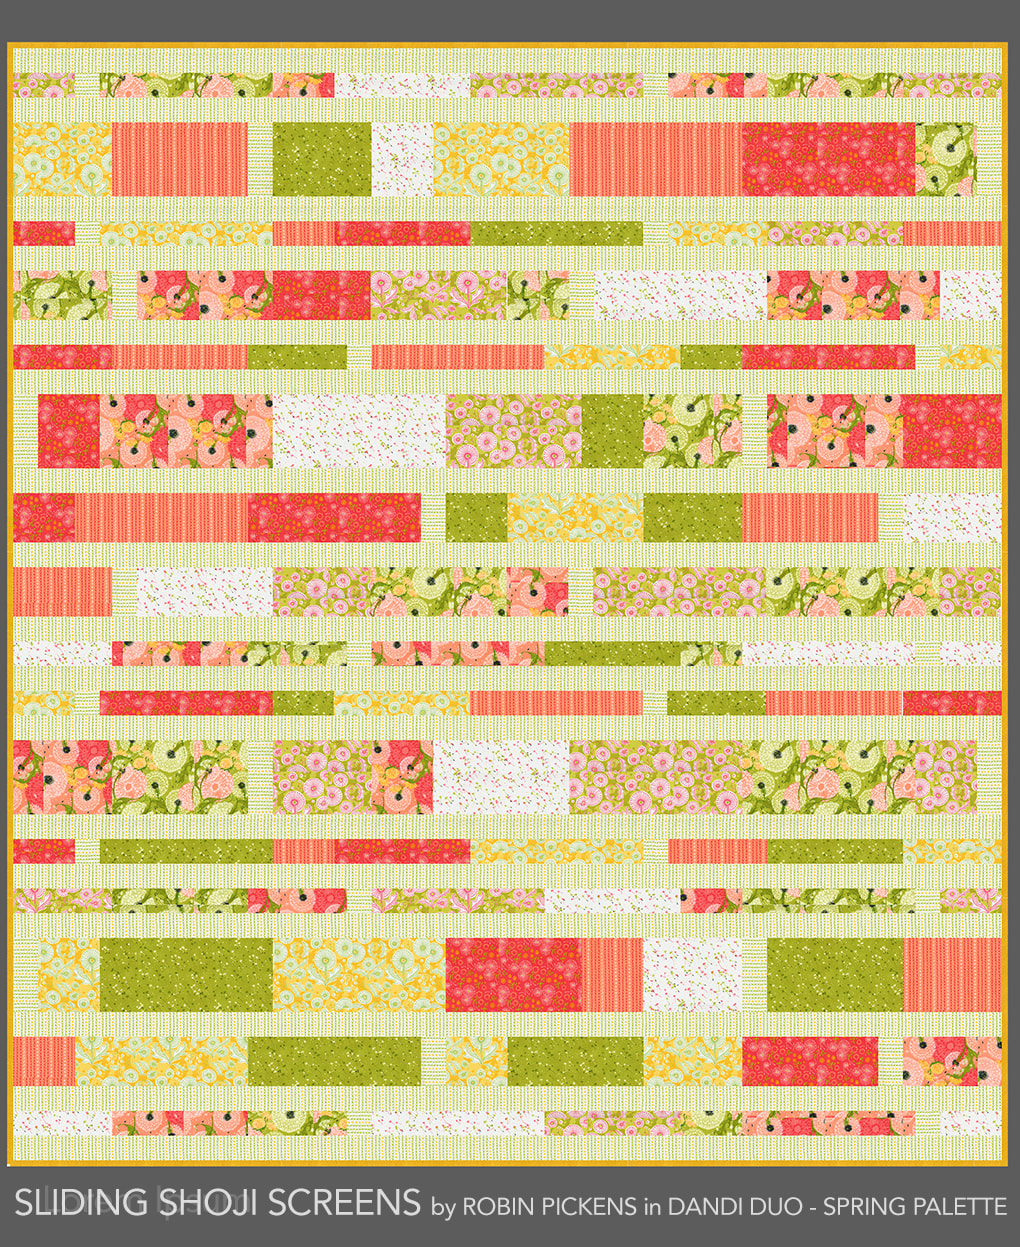 Sliding Shoji Screens quilt in Dandi Duo from Robin Pickens spring palette